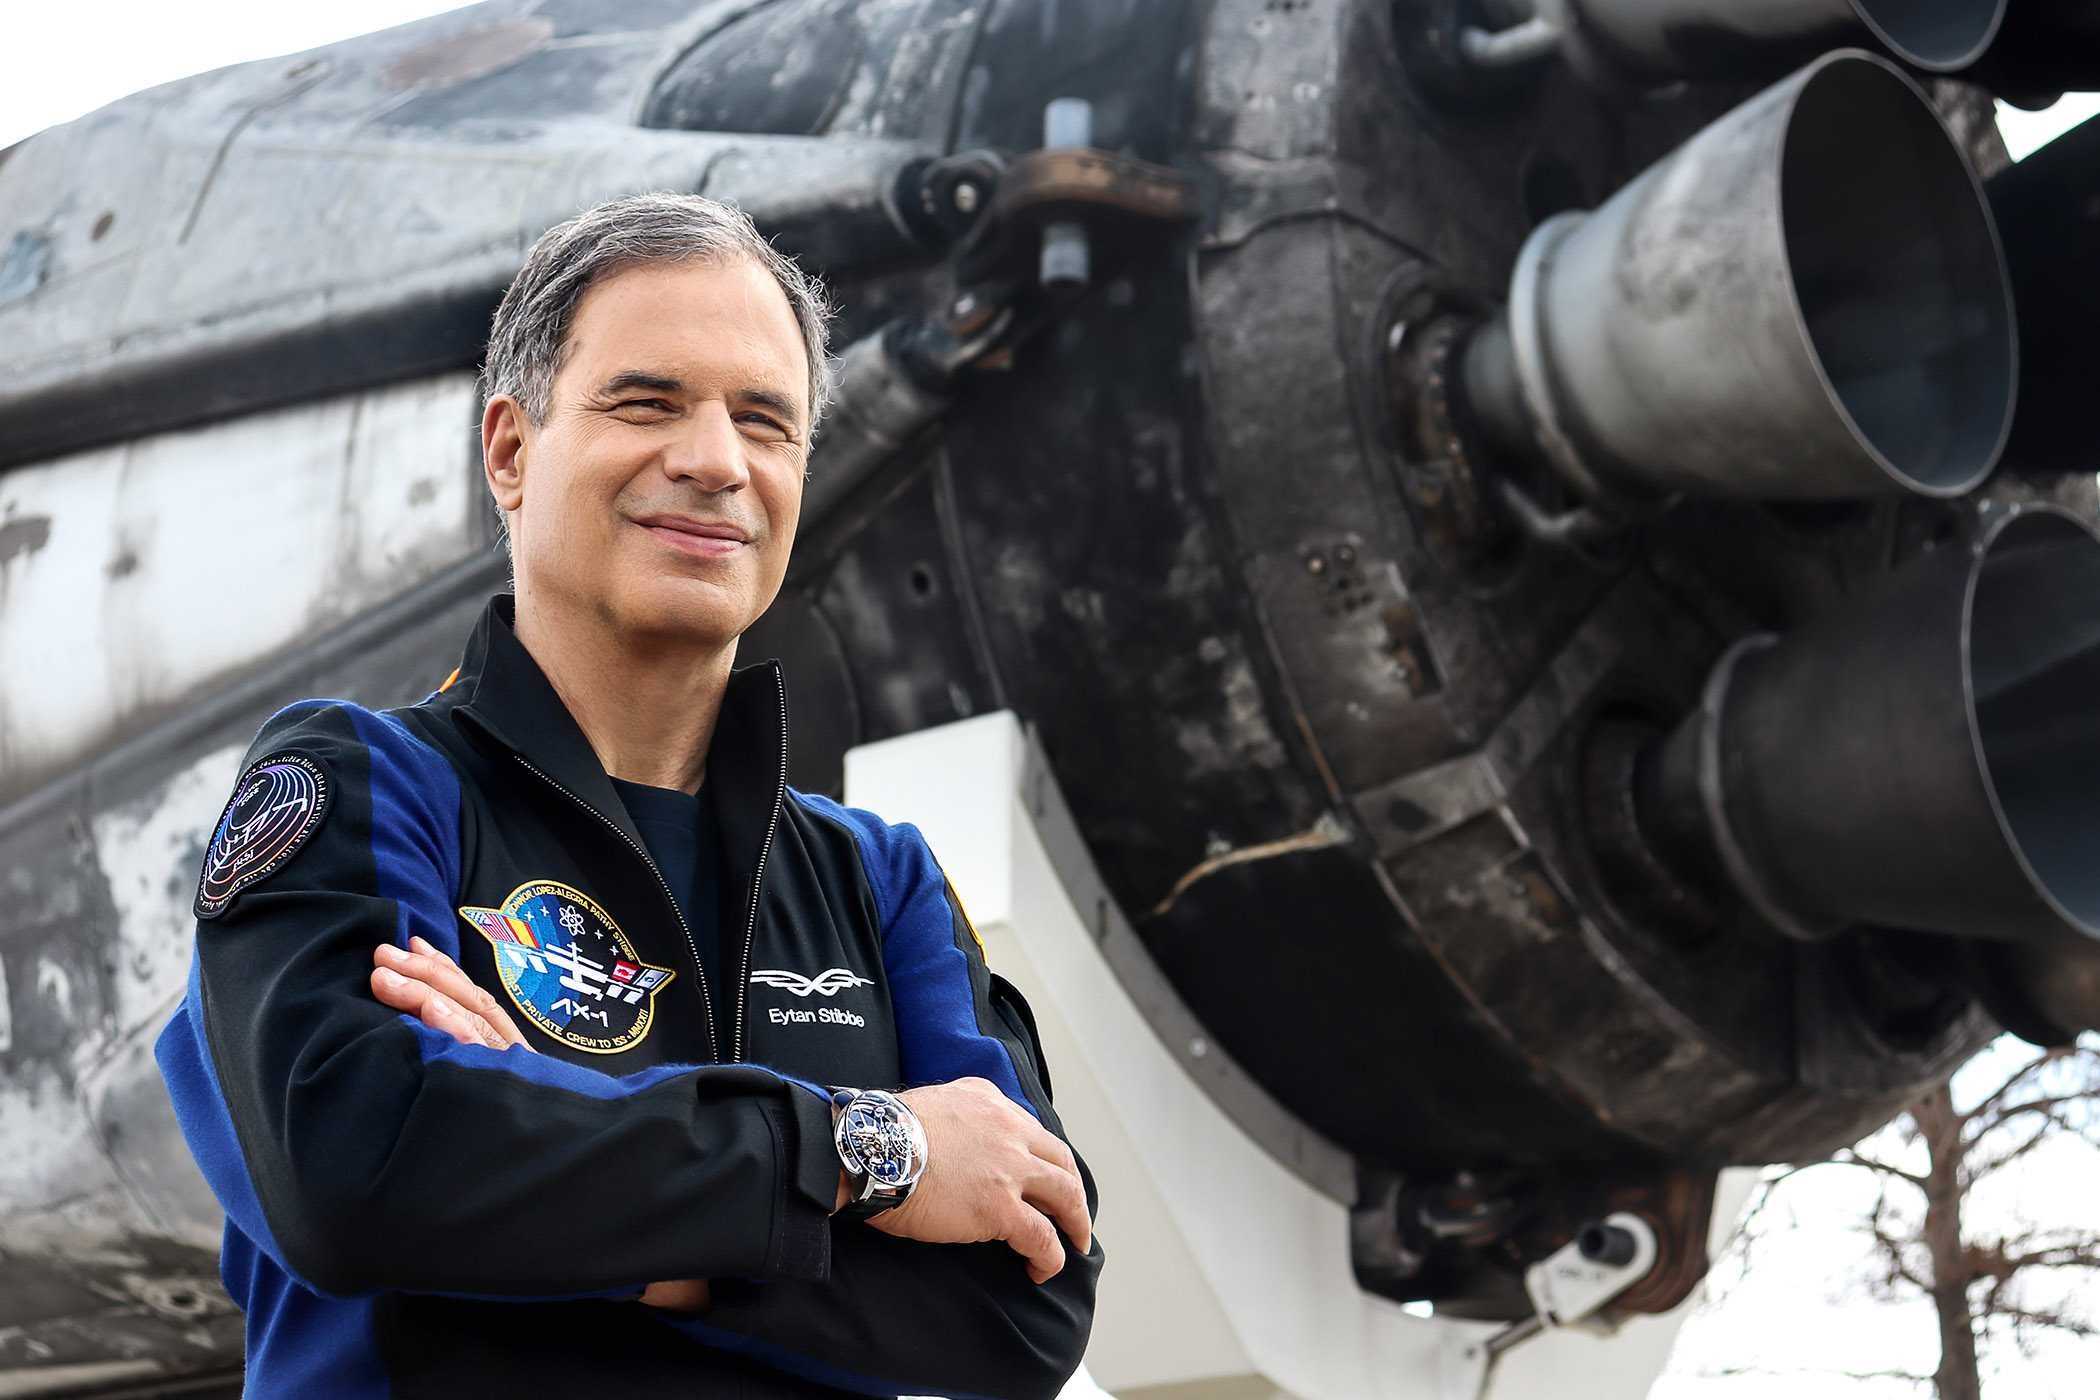 Jacob & Co. Astronomia Tourbillon Bucherer BLUE into space onboard ISS Eytan Stibbe